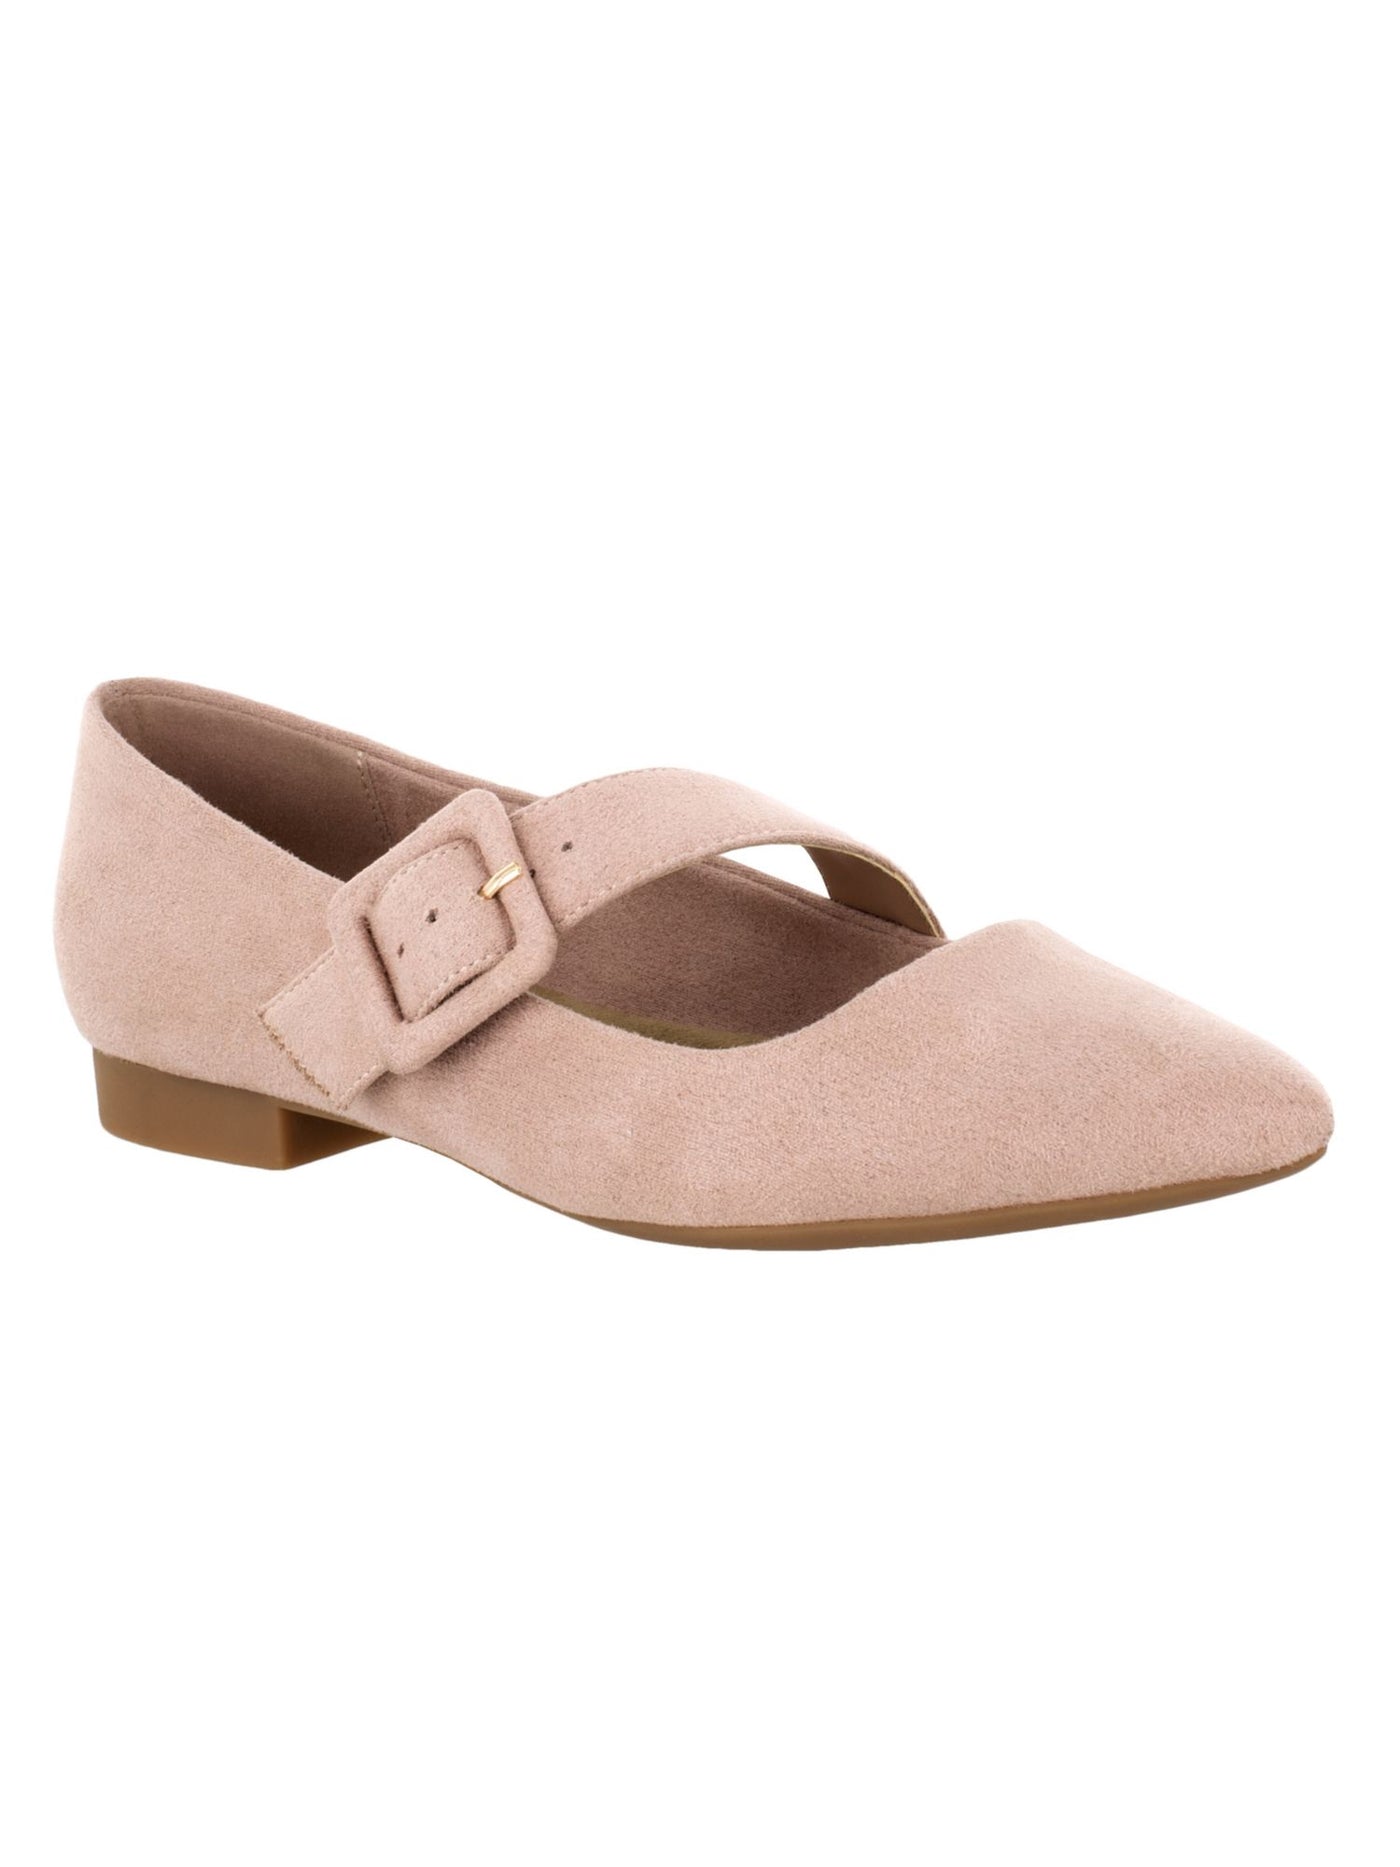 BELLA VITA Womens Pink Mary Jane Padded Asymmetrical Virginia Pointed Toe Block Heel Buckle Flats Shoes 8.5 M